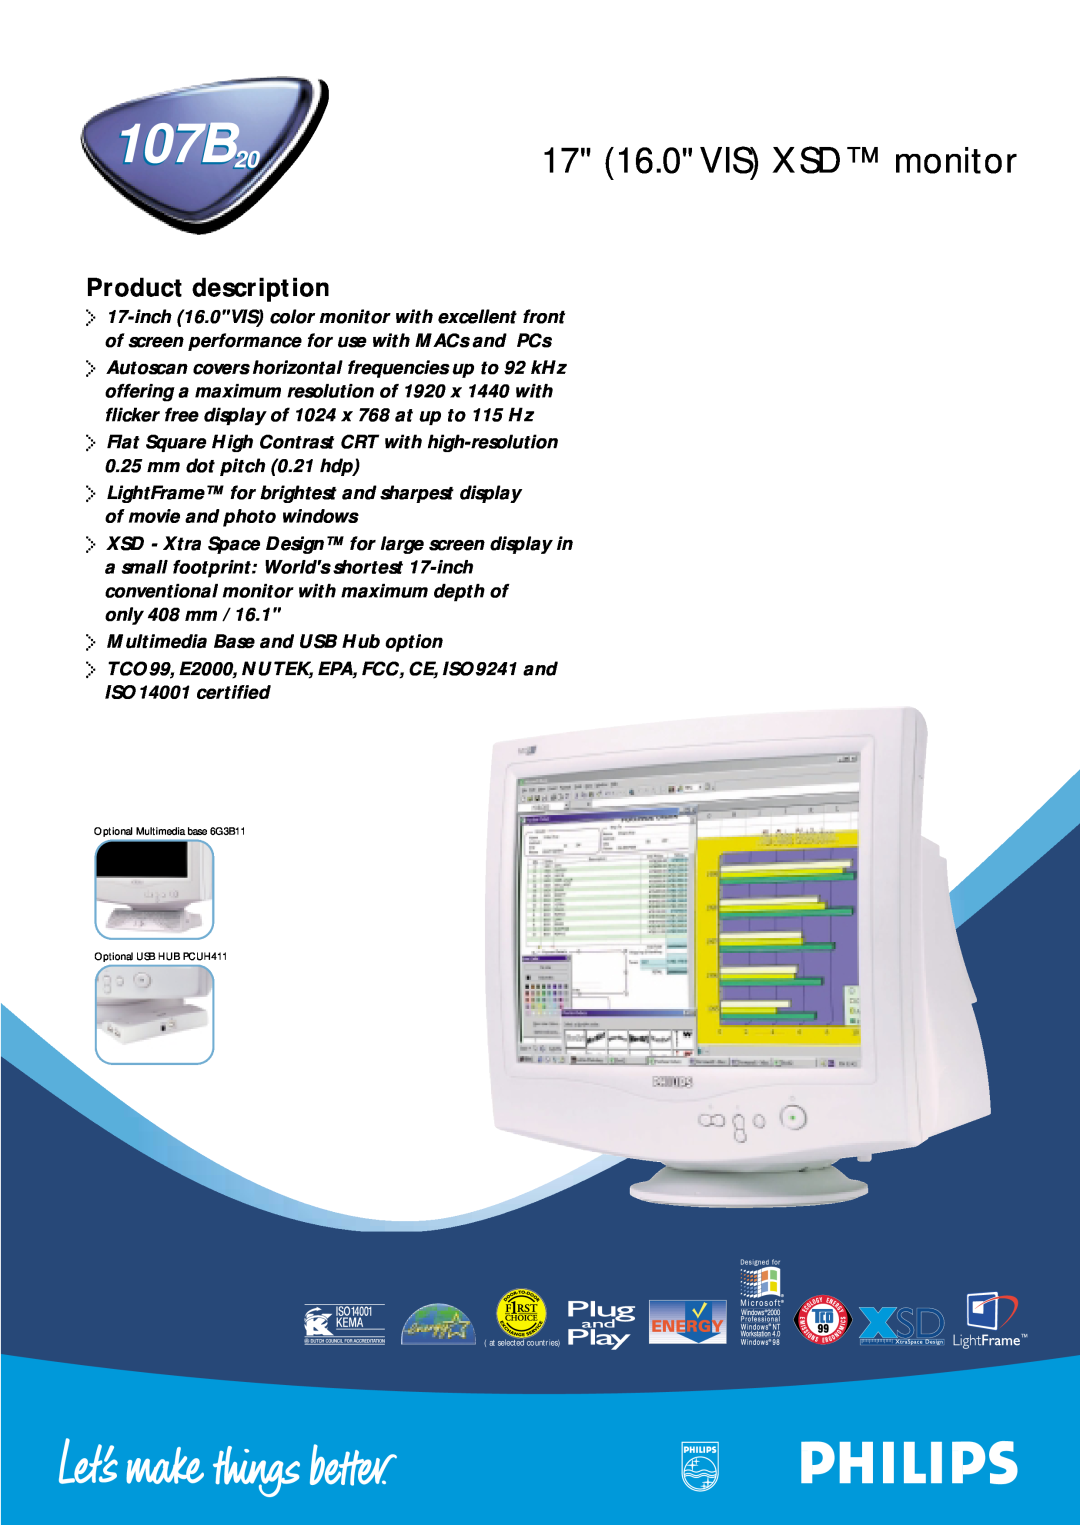 Philips 107B20 manual 17 16.0 VIS XSD monitor, Product description 